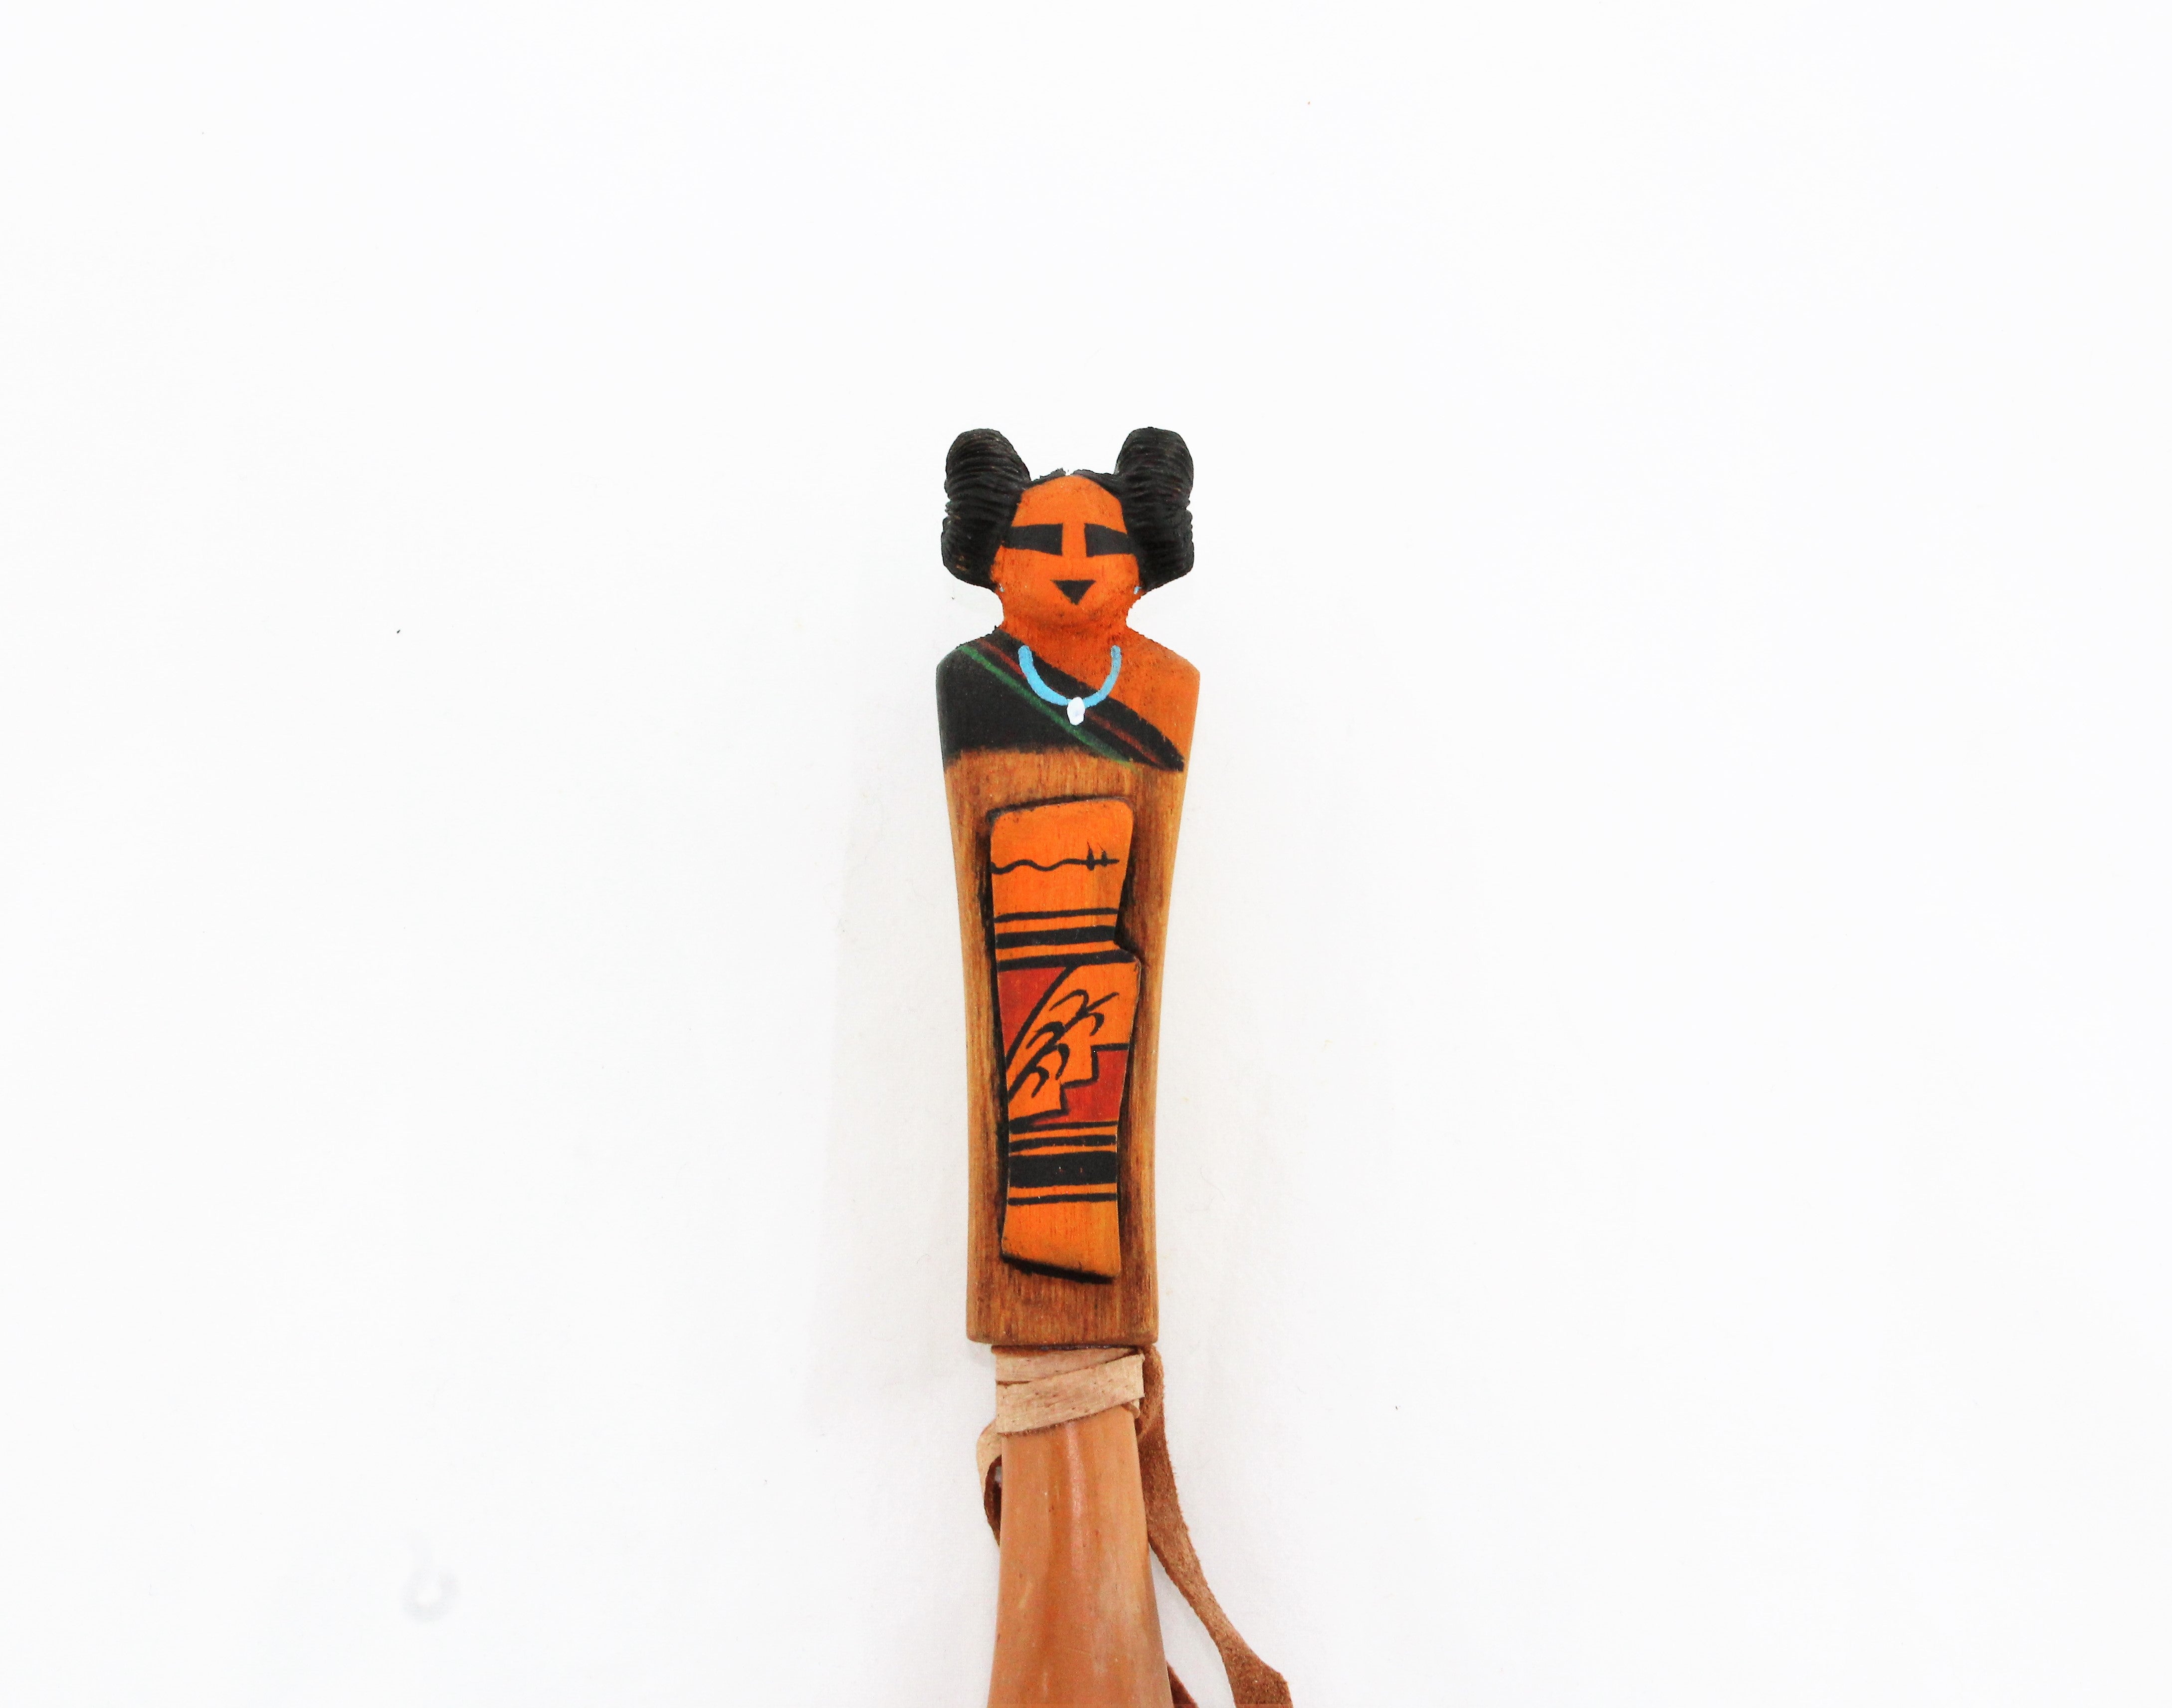 Hopi Pottery Ladle with Kachina Mana Handle